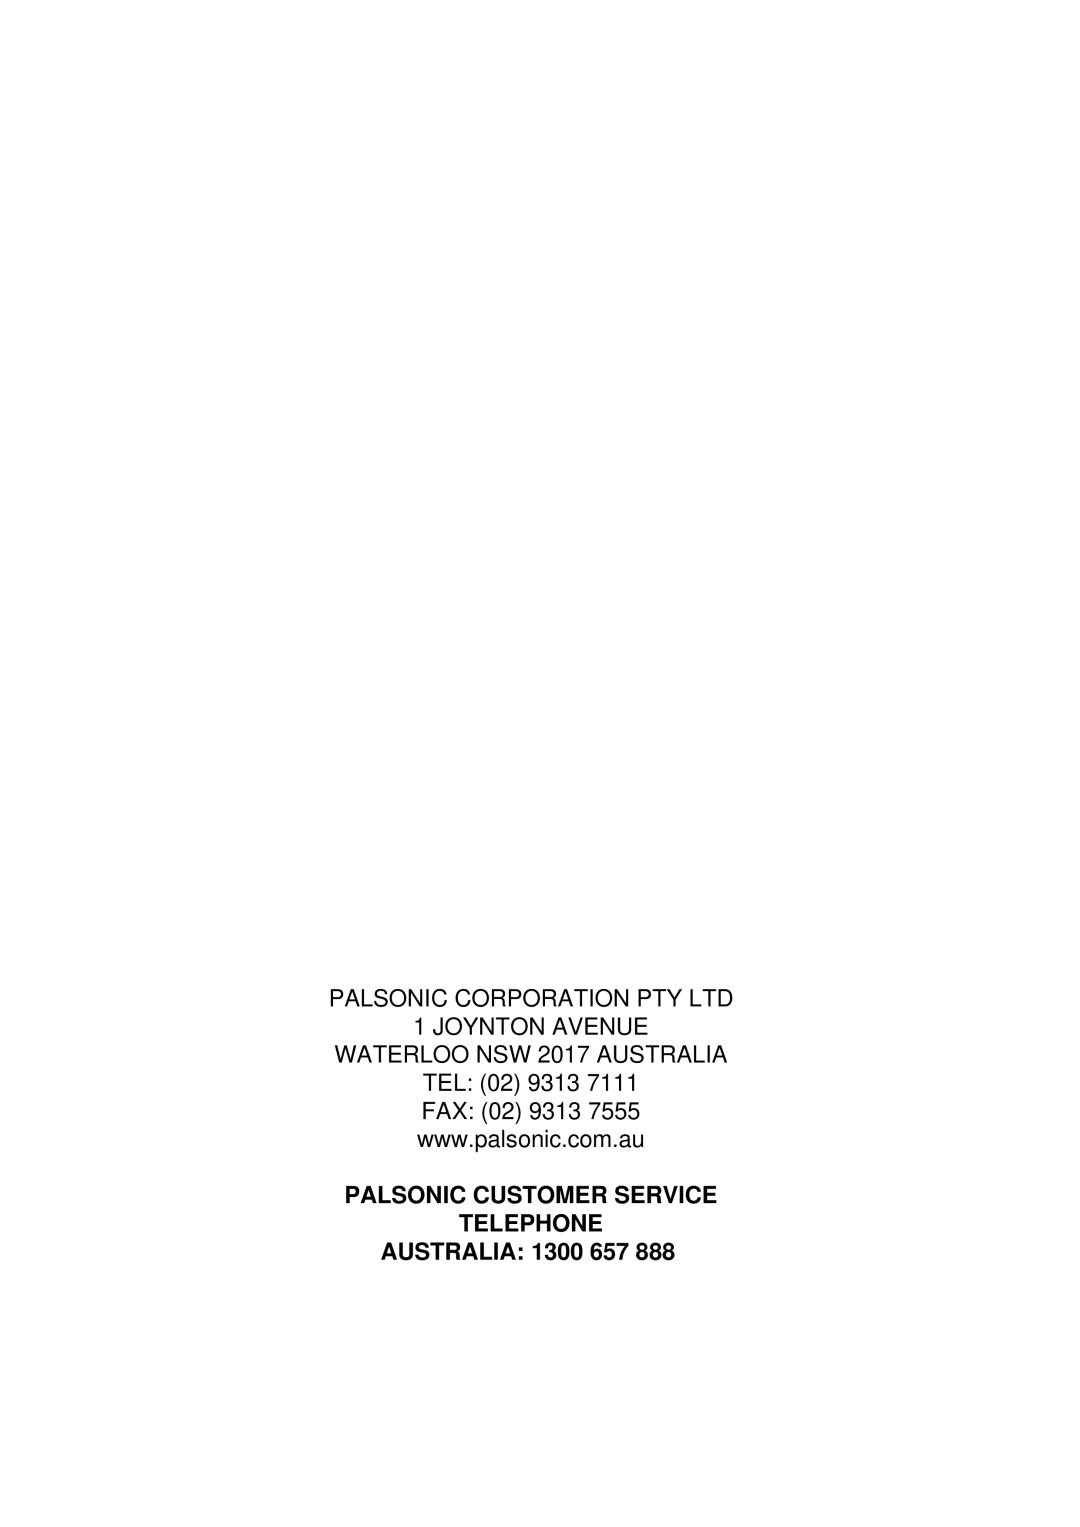 Palsonic PMC-211 instruction manual WATERLOO NSW 2017 AUSTRALIA TEL, Palsonic Customer Service Telephone, Australia 